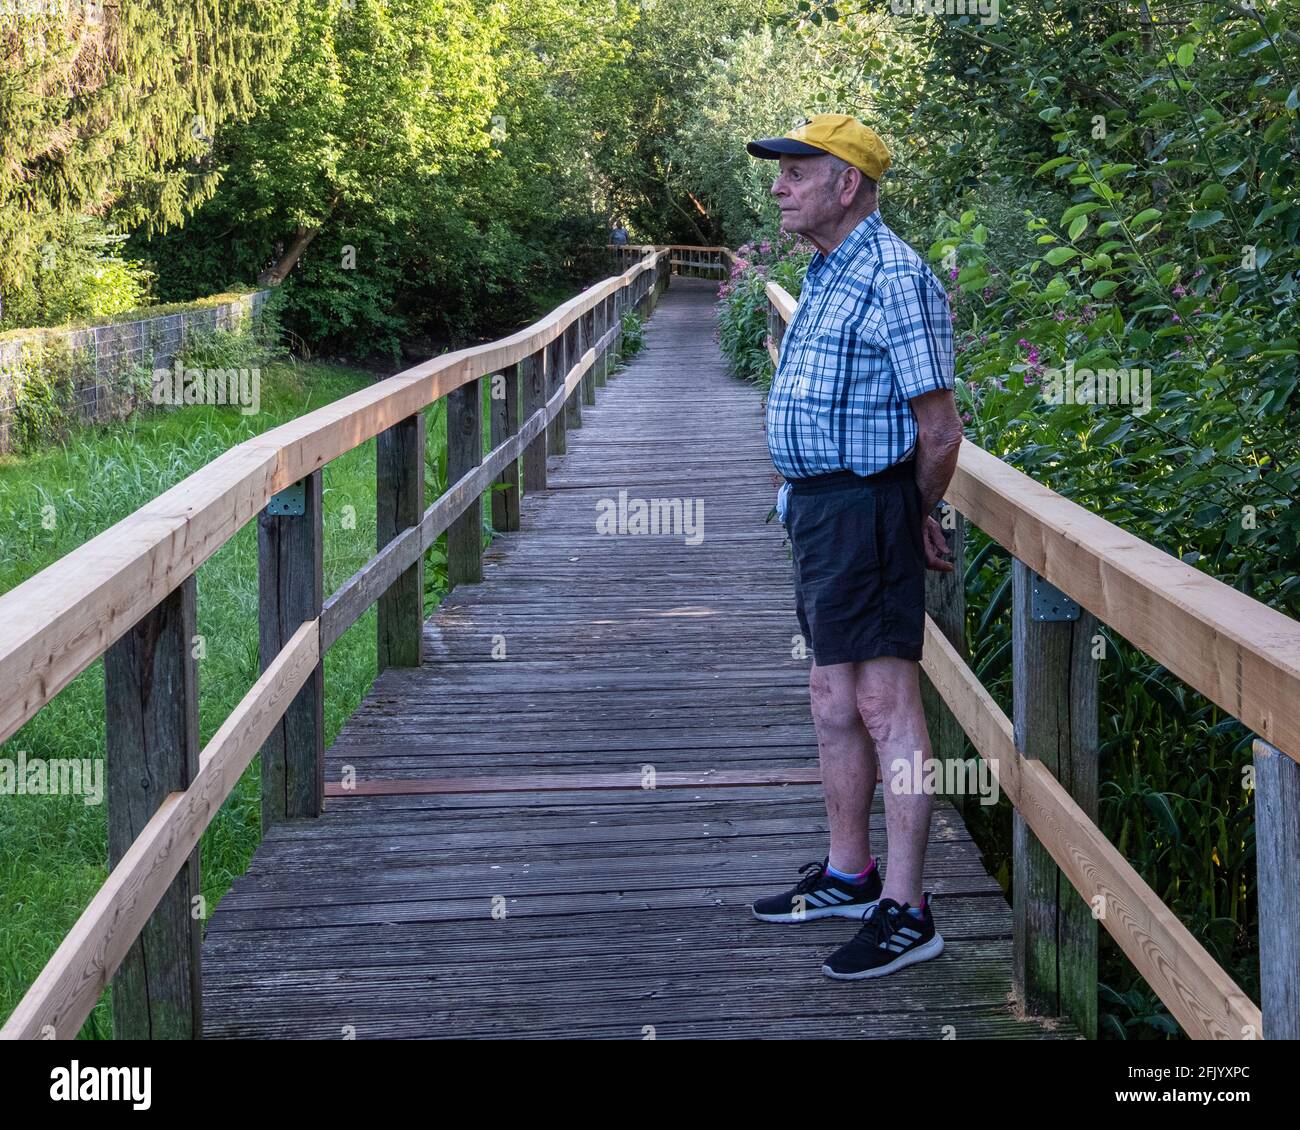 Elderly man on wooden Bridge in small holding. Allotment garden area in Berlin,Germany Stock Photo